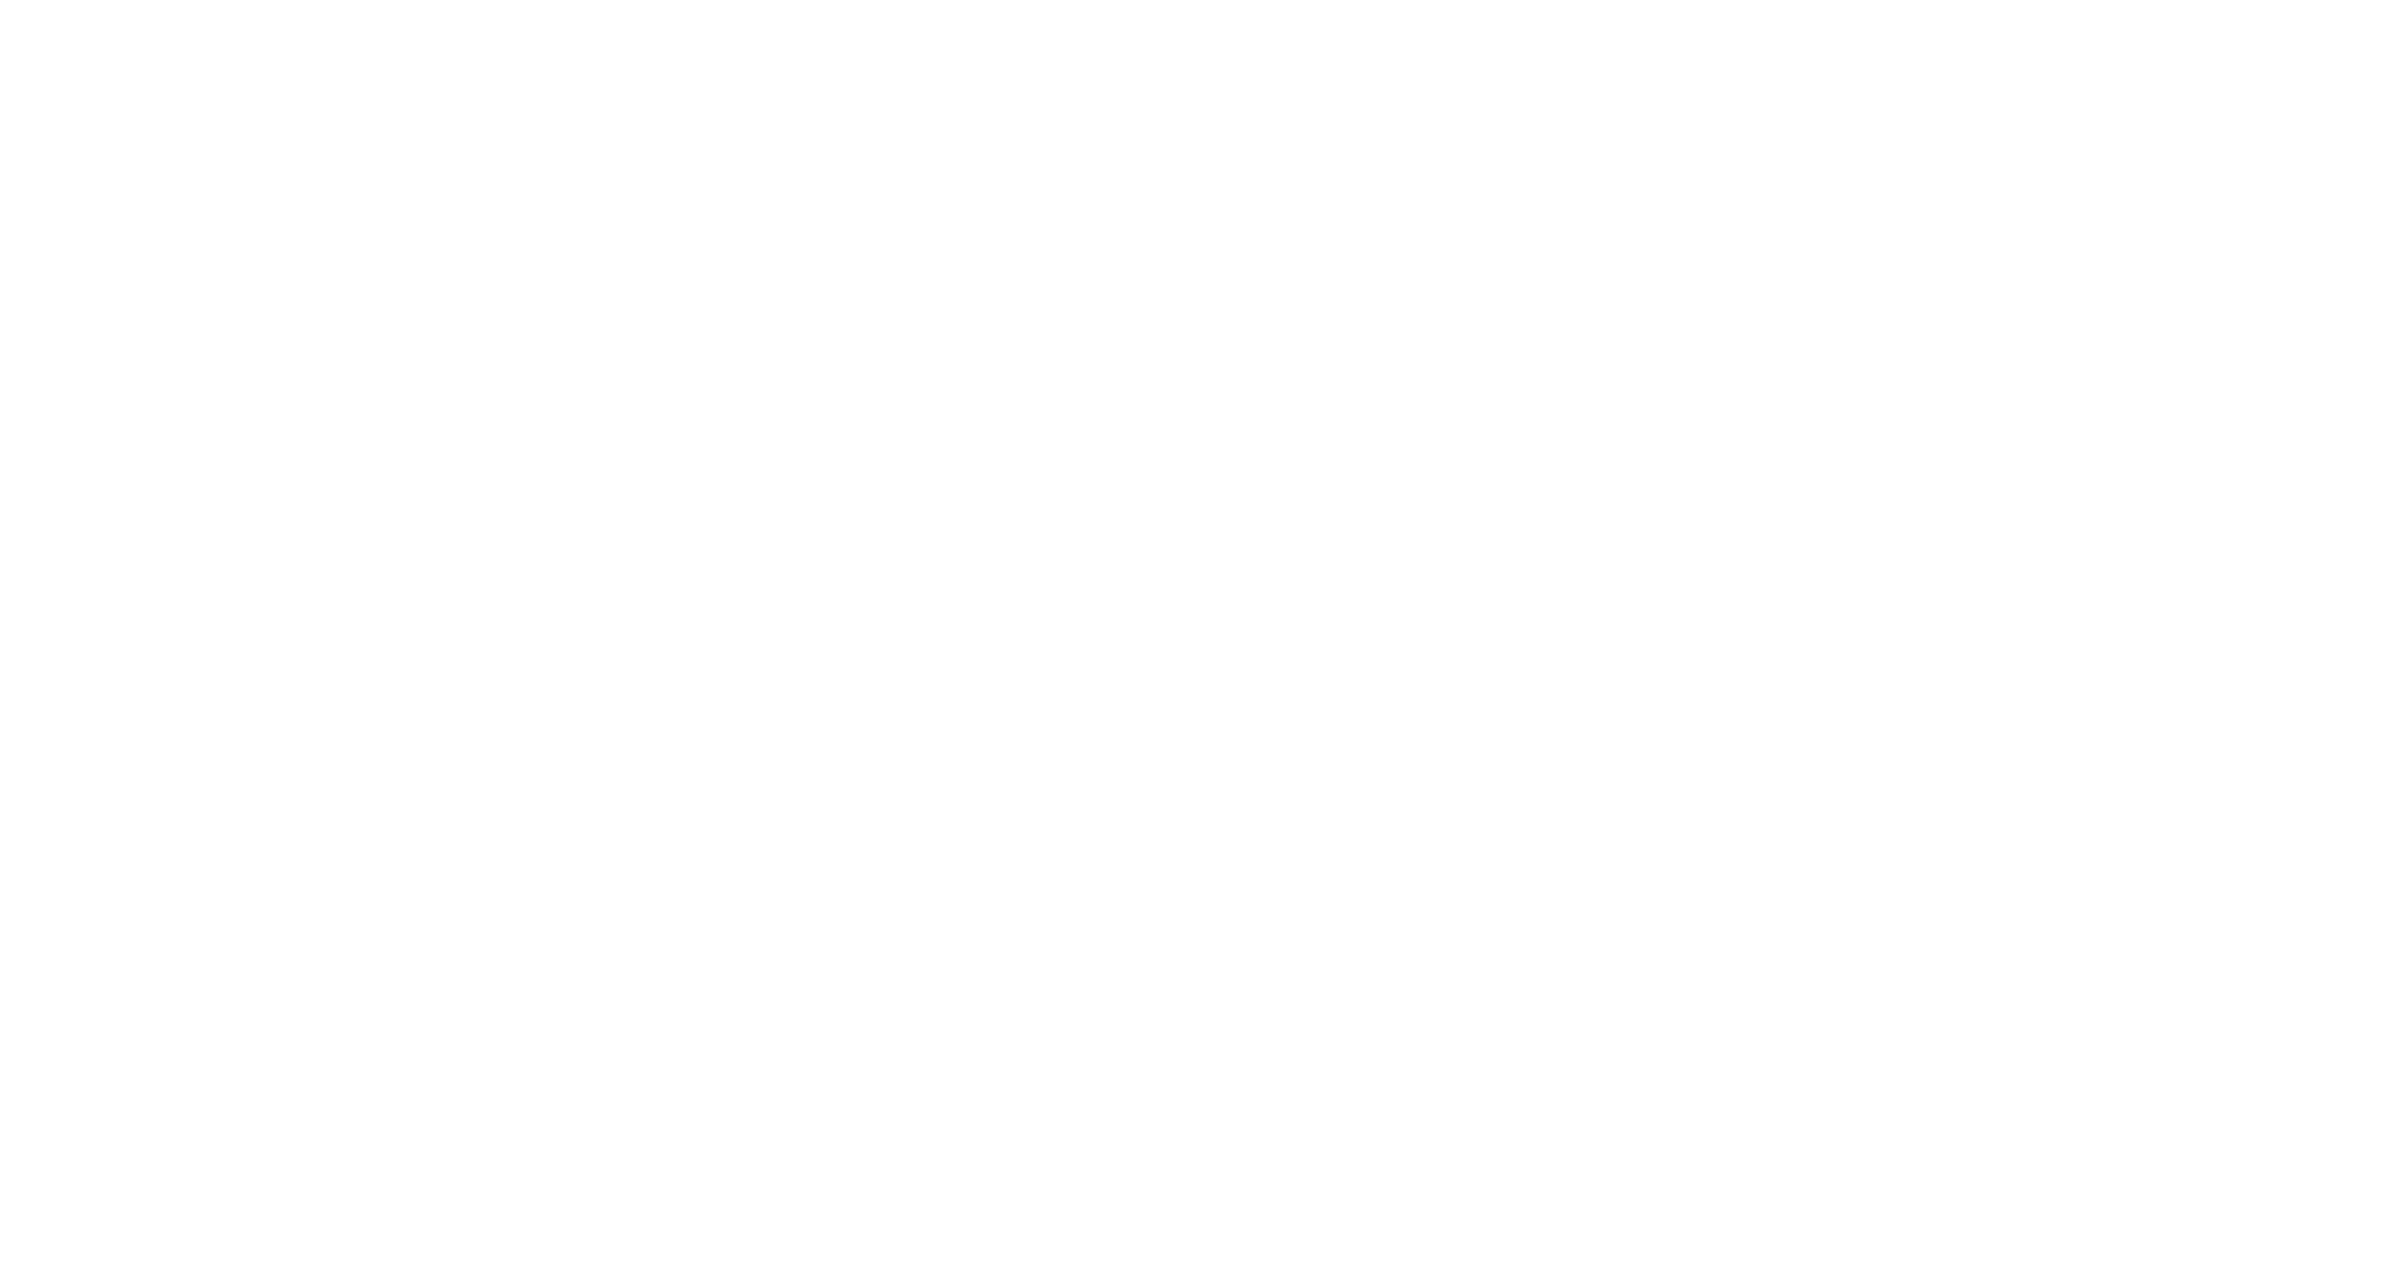 Blue Ray Logo - Blu ray Disc Logo PNG Transparent & SVG Vector